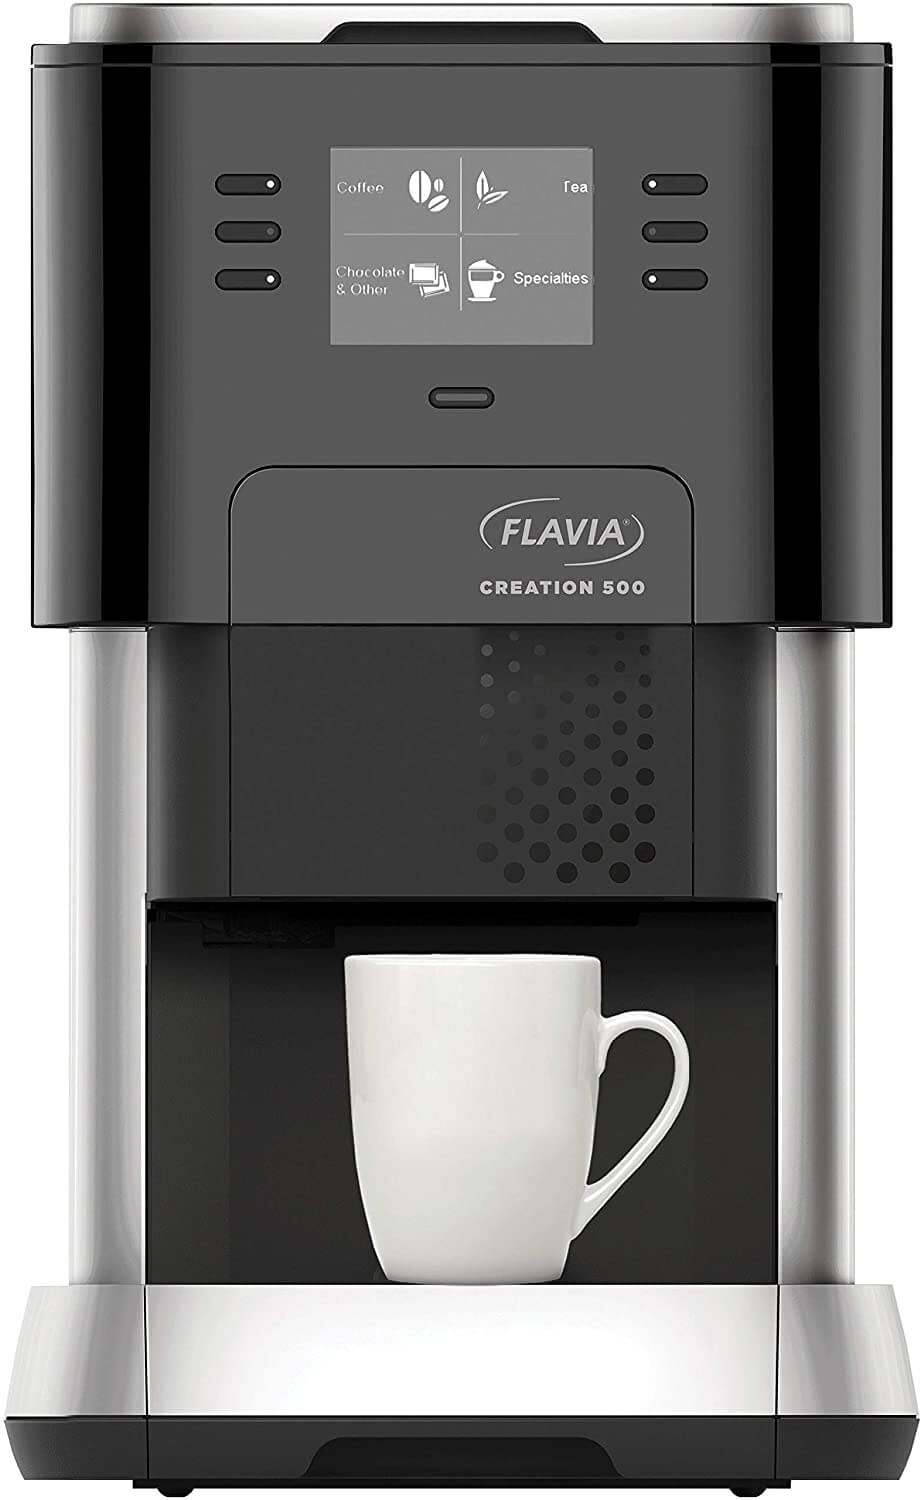 https://www.davians.com/wp-content/uploads/2021/01/flavia-coffee-machine.jpg